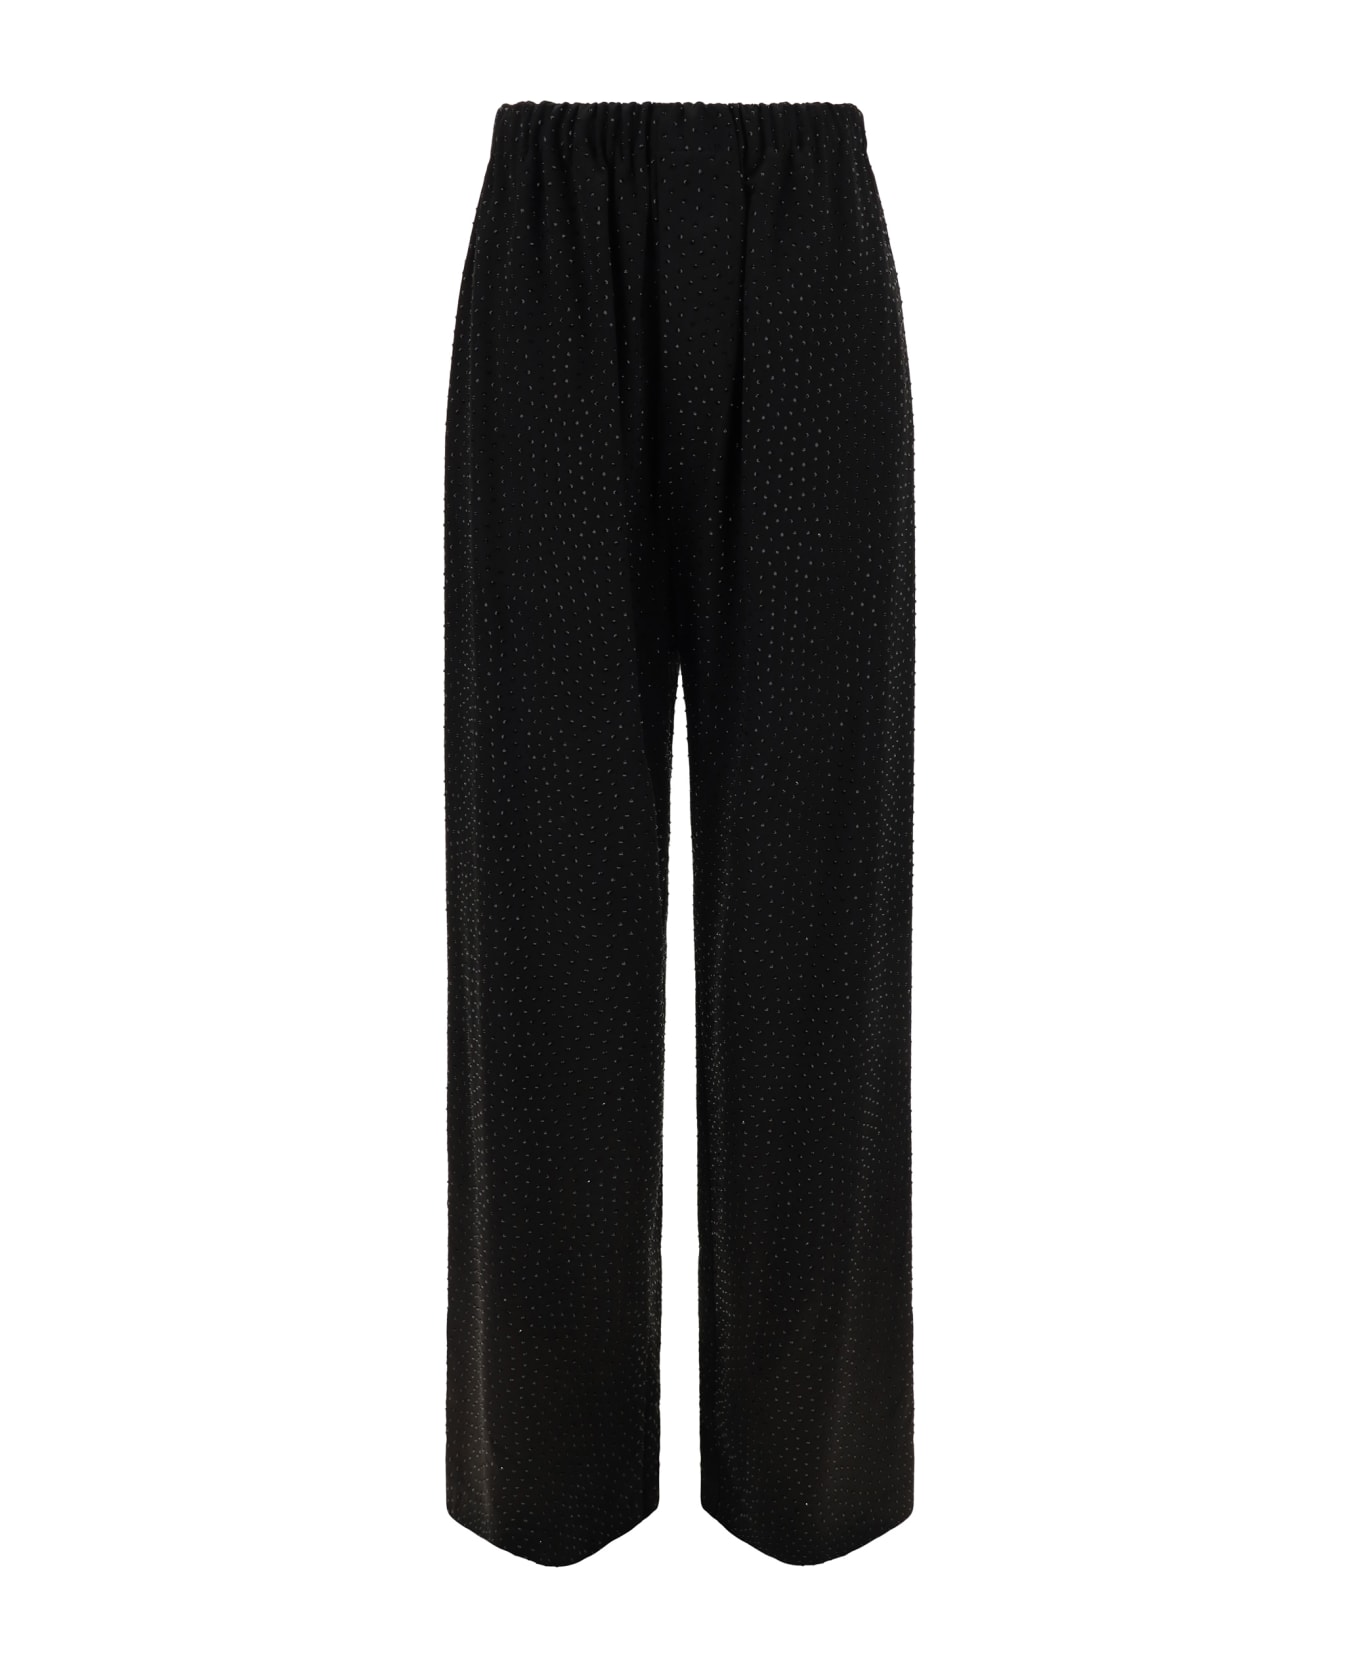 Balenciaga Pants - Black/black